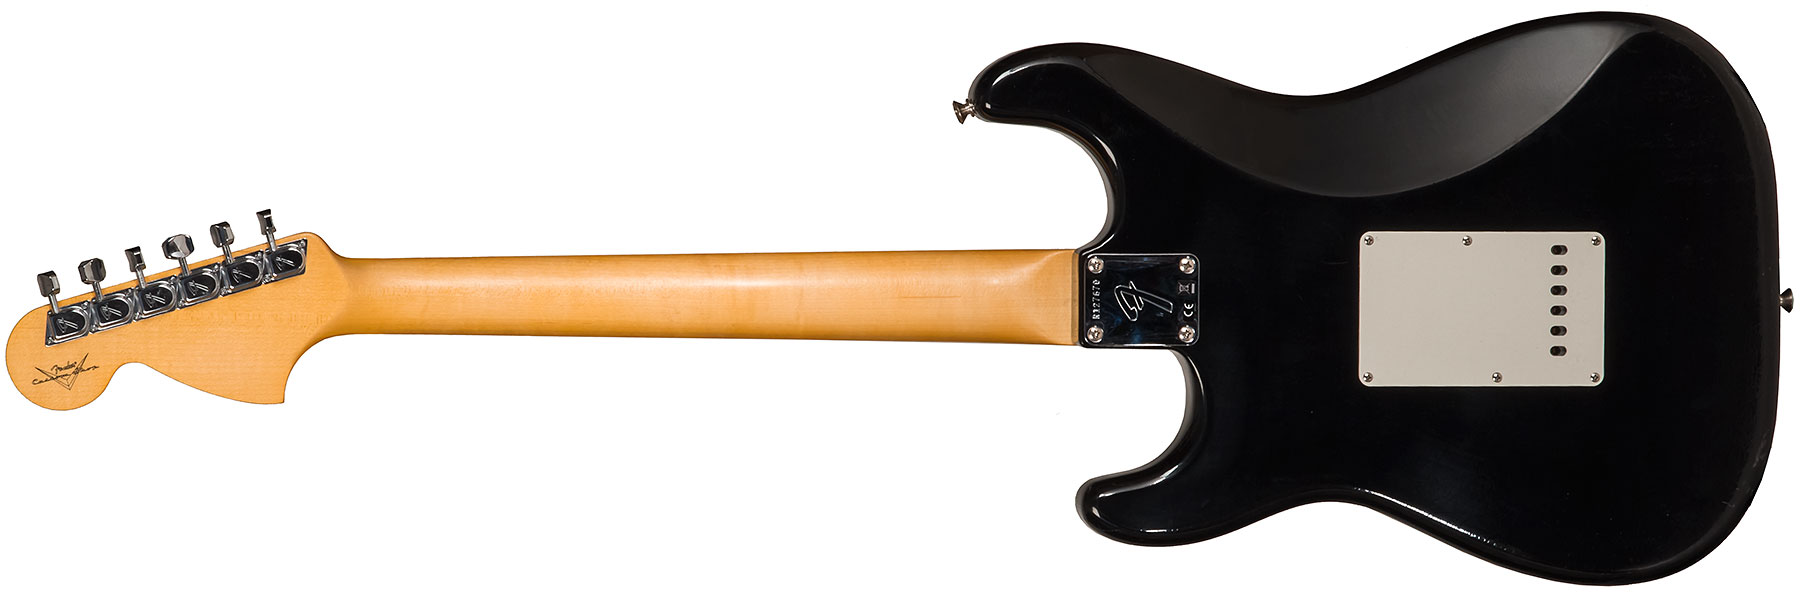 Fender Custom Shop Strat 1969 3s Trem Mn #r127670 - Closet Classic Black - Guitarra eléctrica con forma de str. - Variation 1